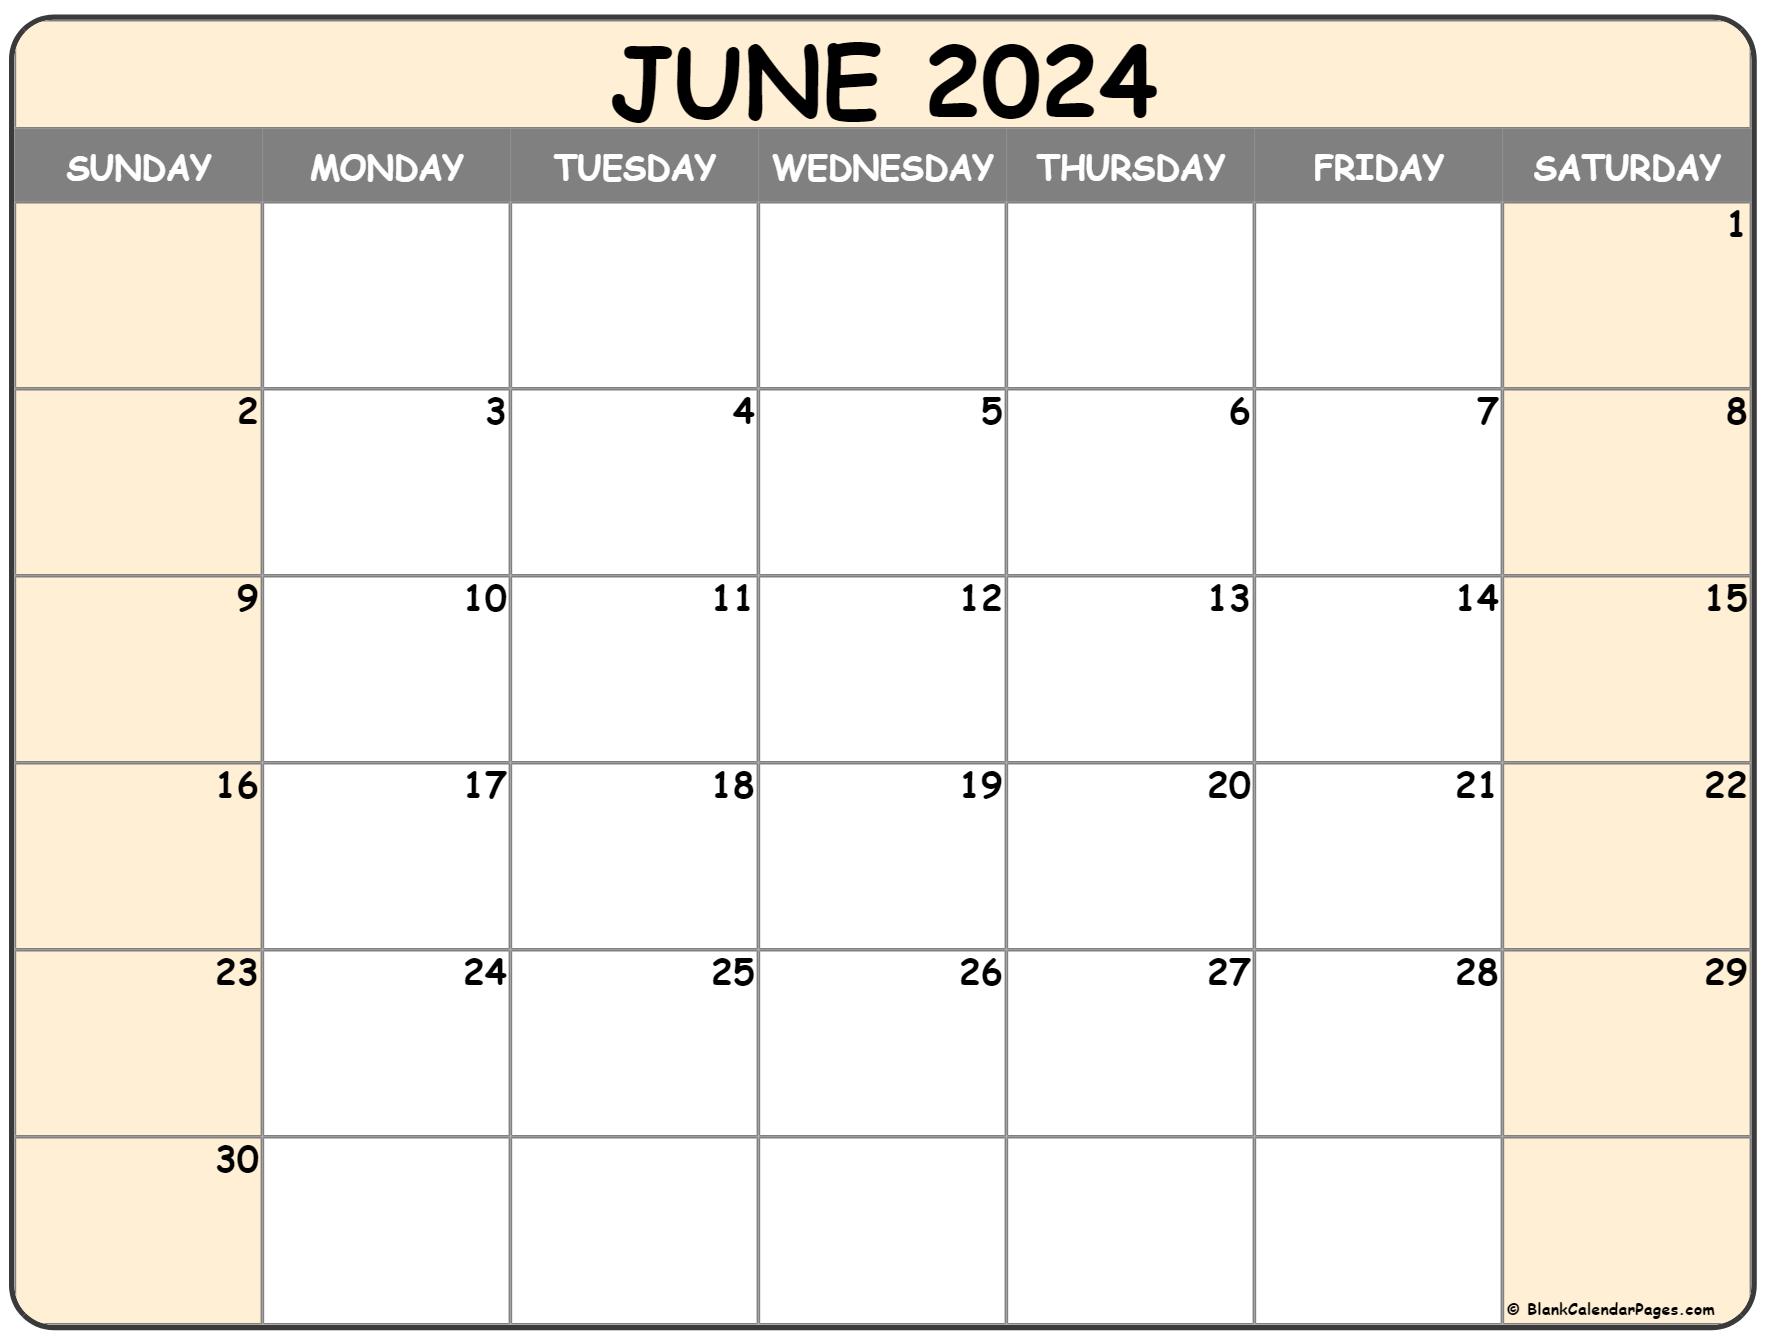 June 2022 calendar | free printable monthly calendars